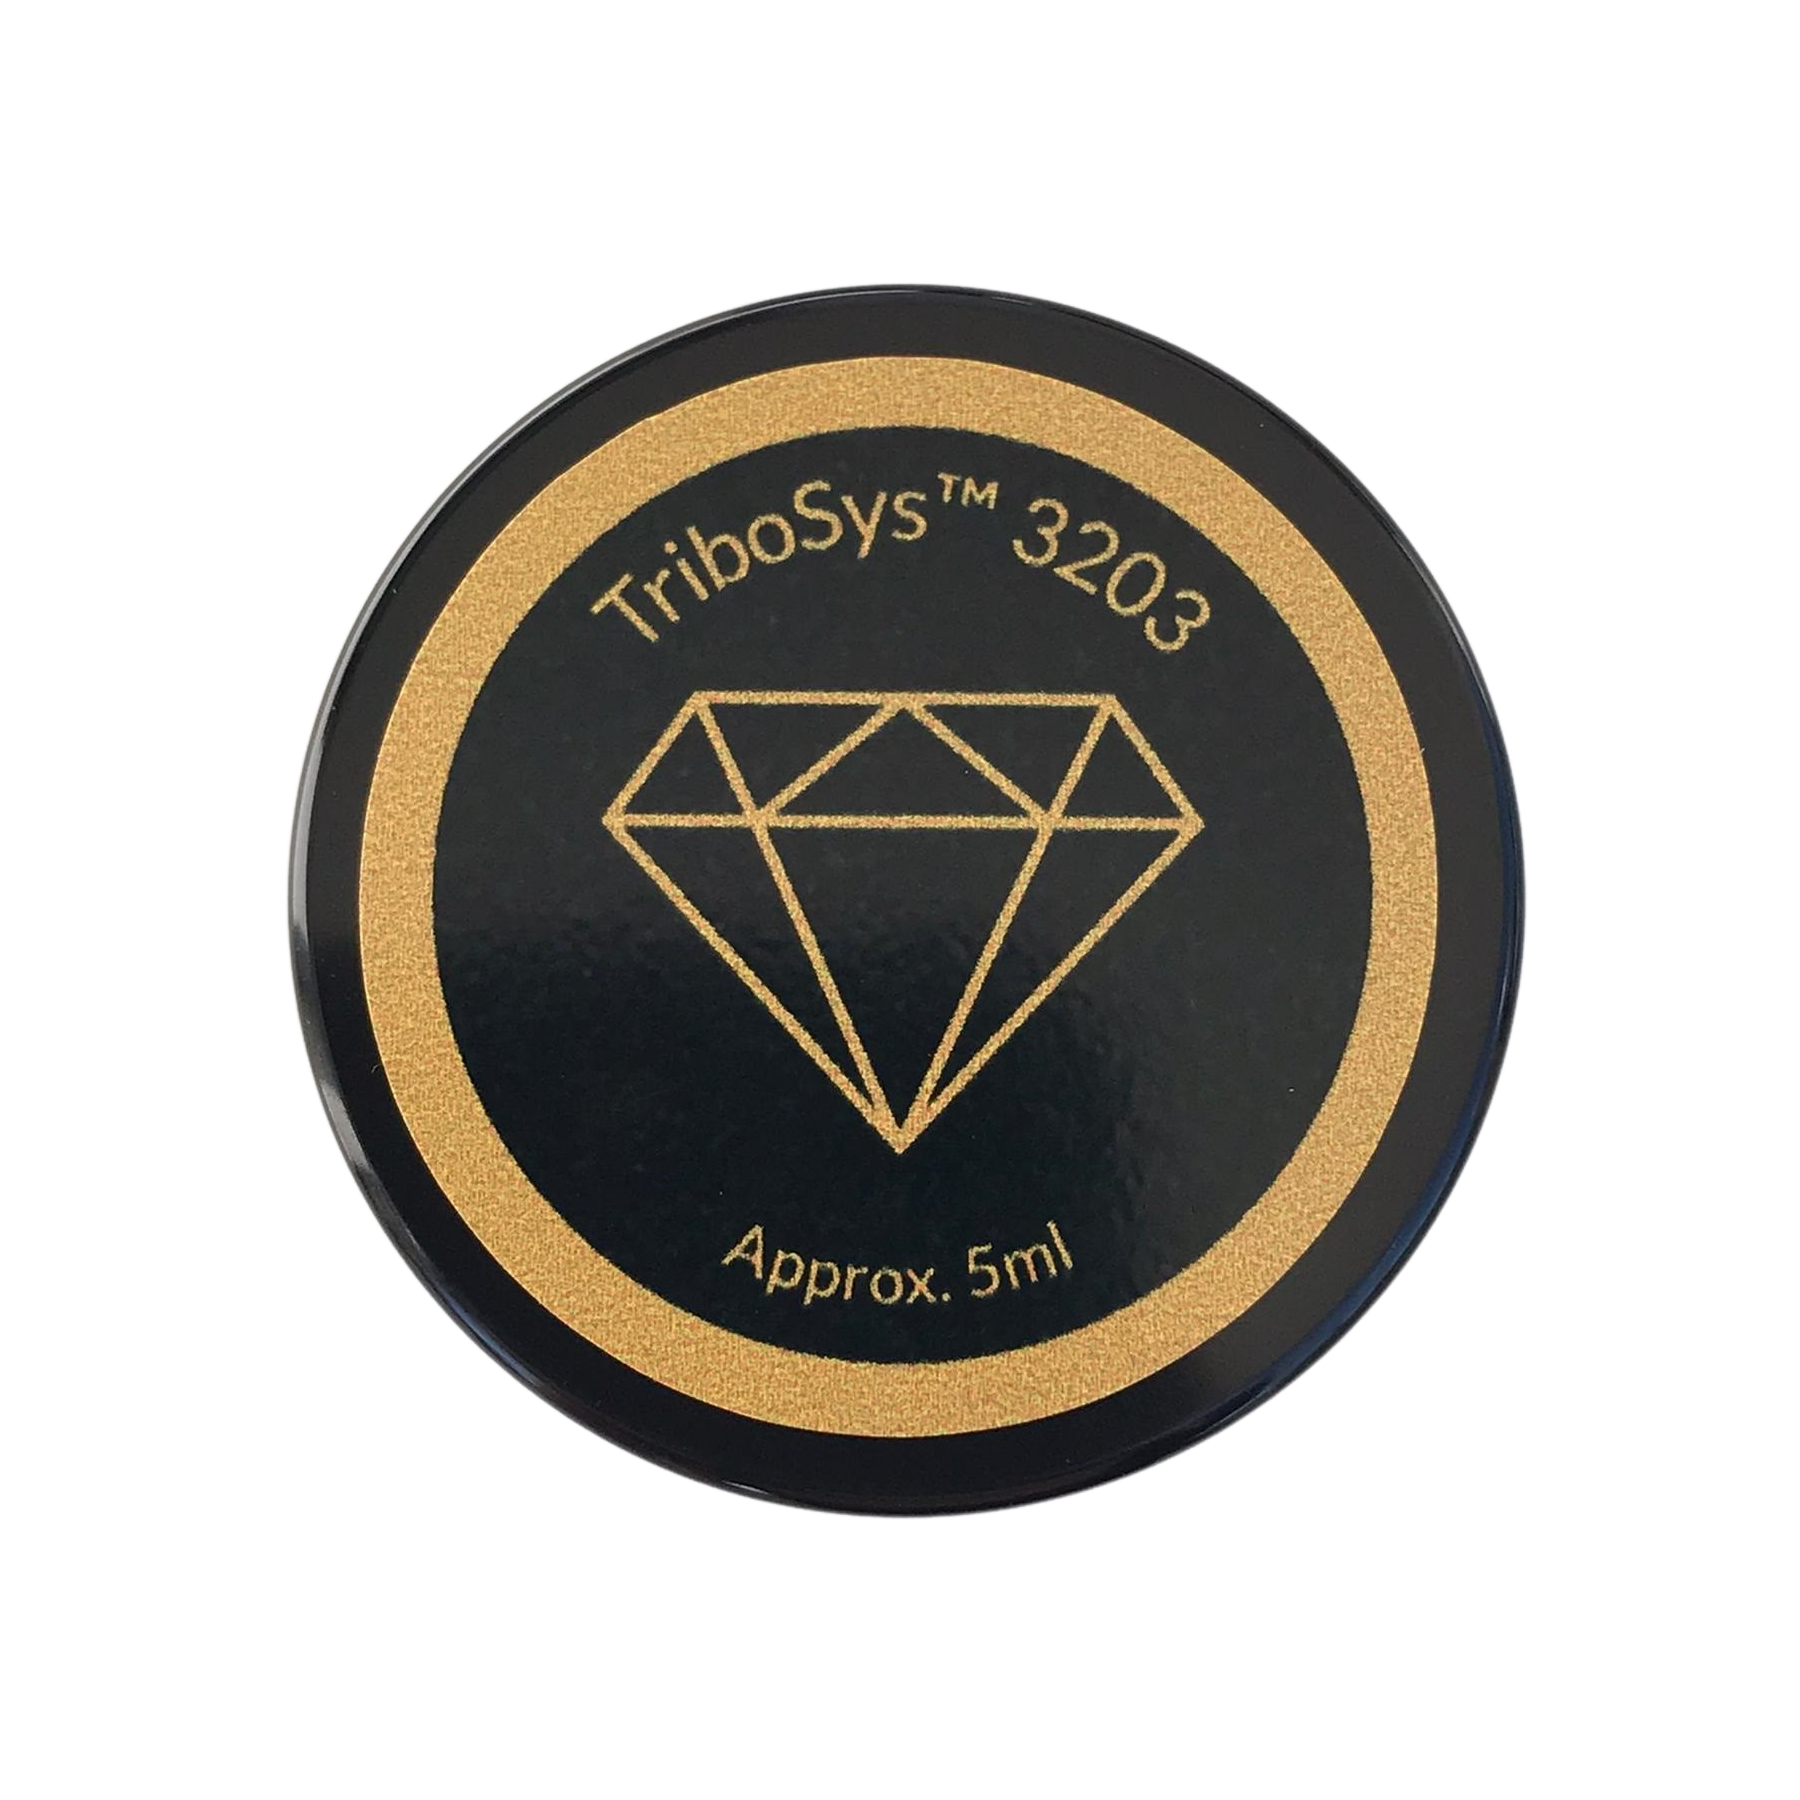 TriboSys™ 3203